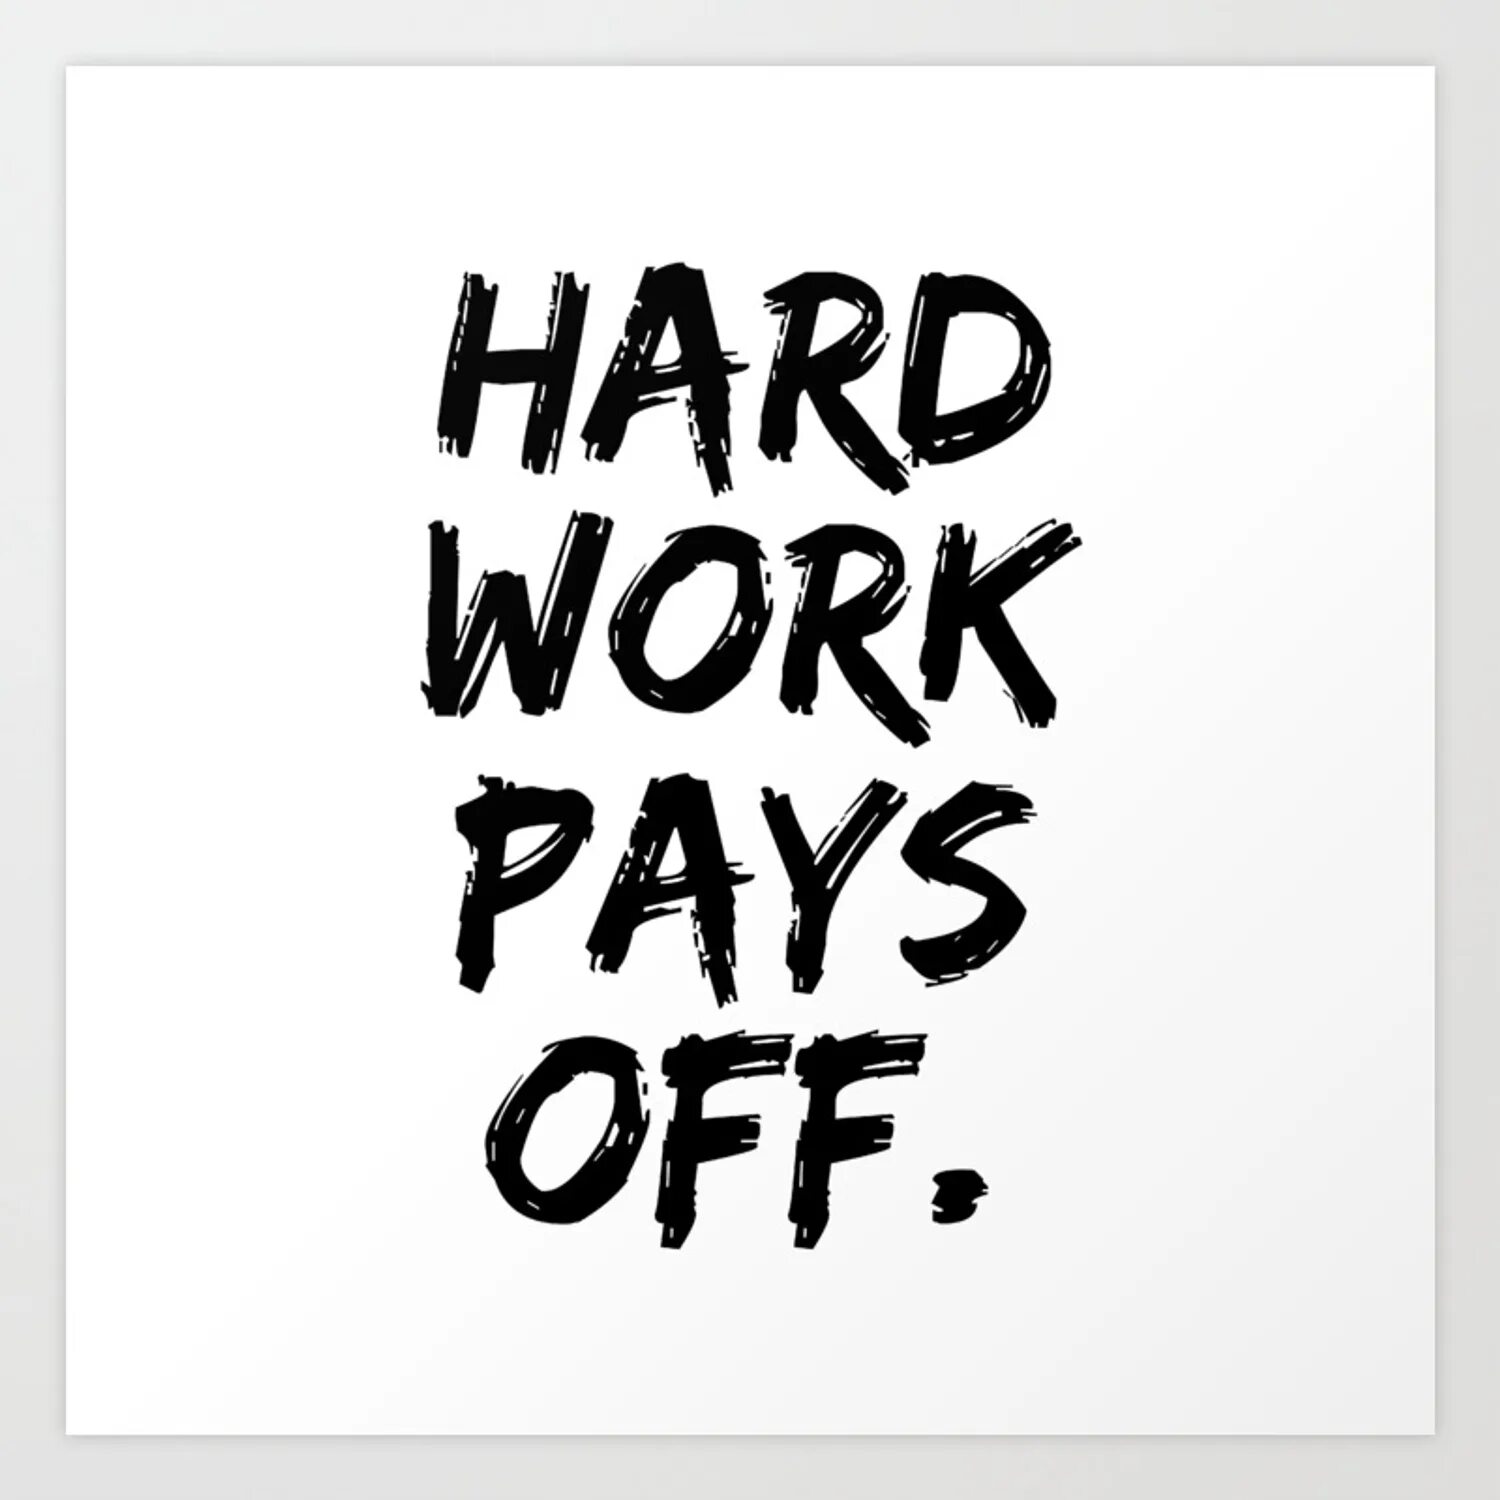 Hard work pays off. Hard work pays off обои. Hard work pays off перевод. Картинка hard work pays off.